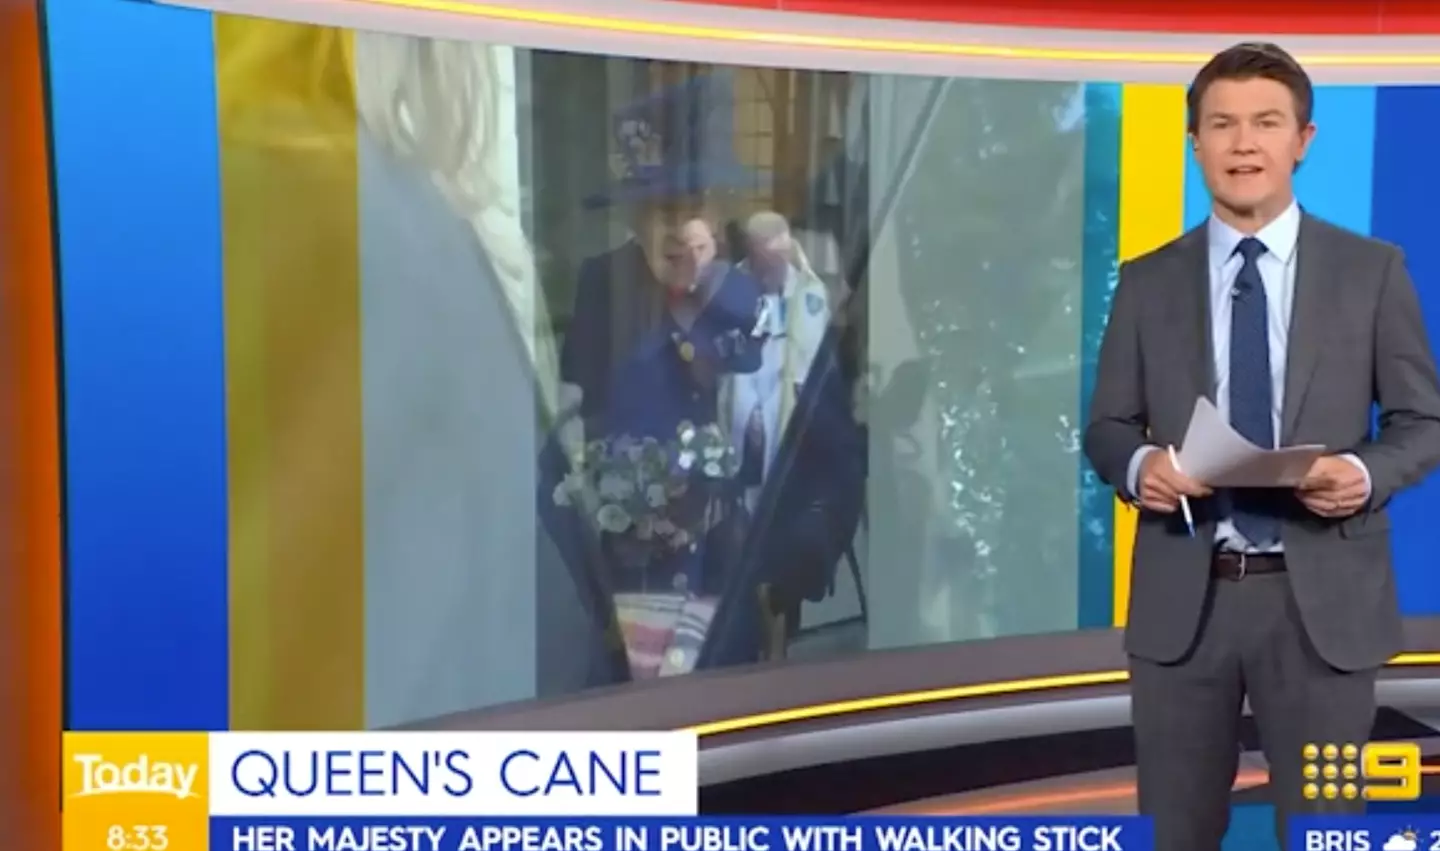 Newsreader Alex Cullen reported on the Queen's walking stick (